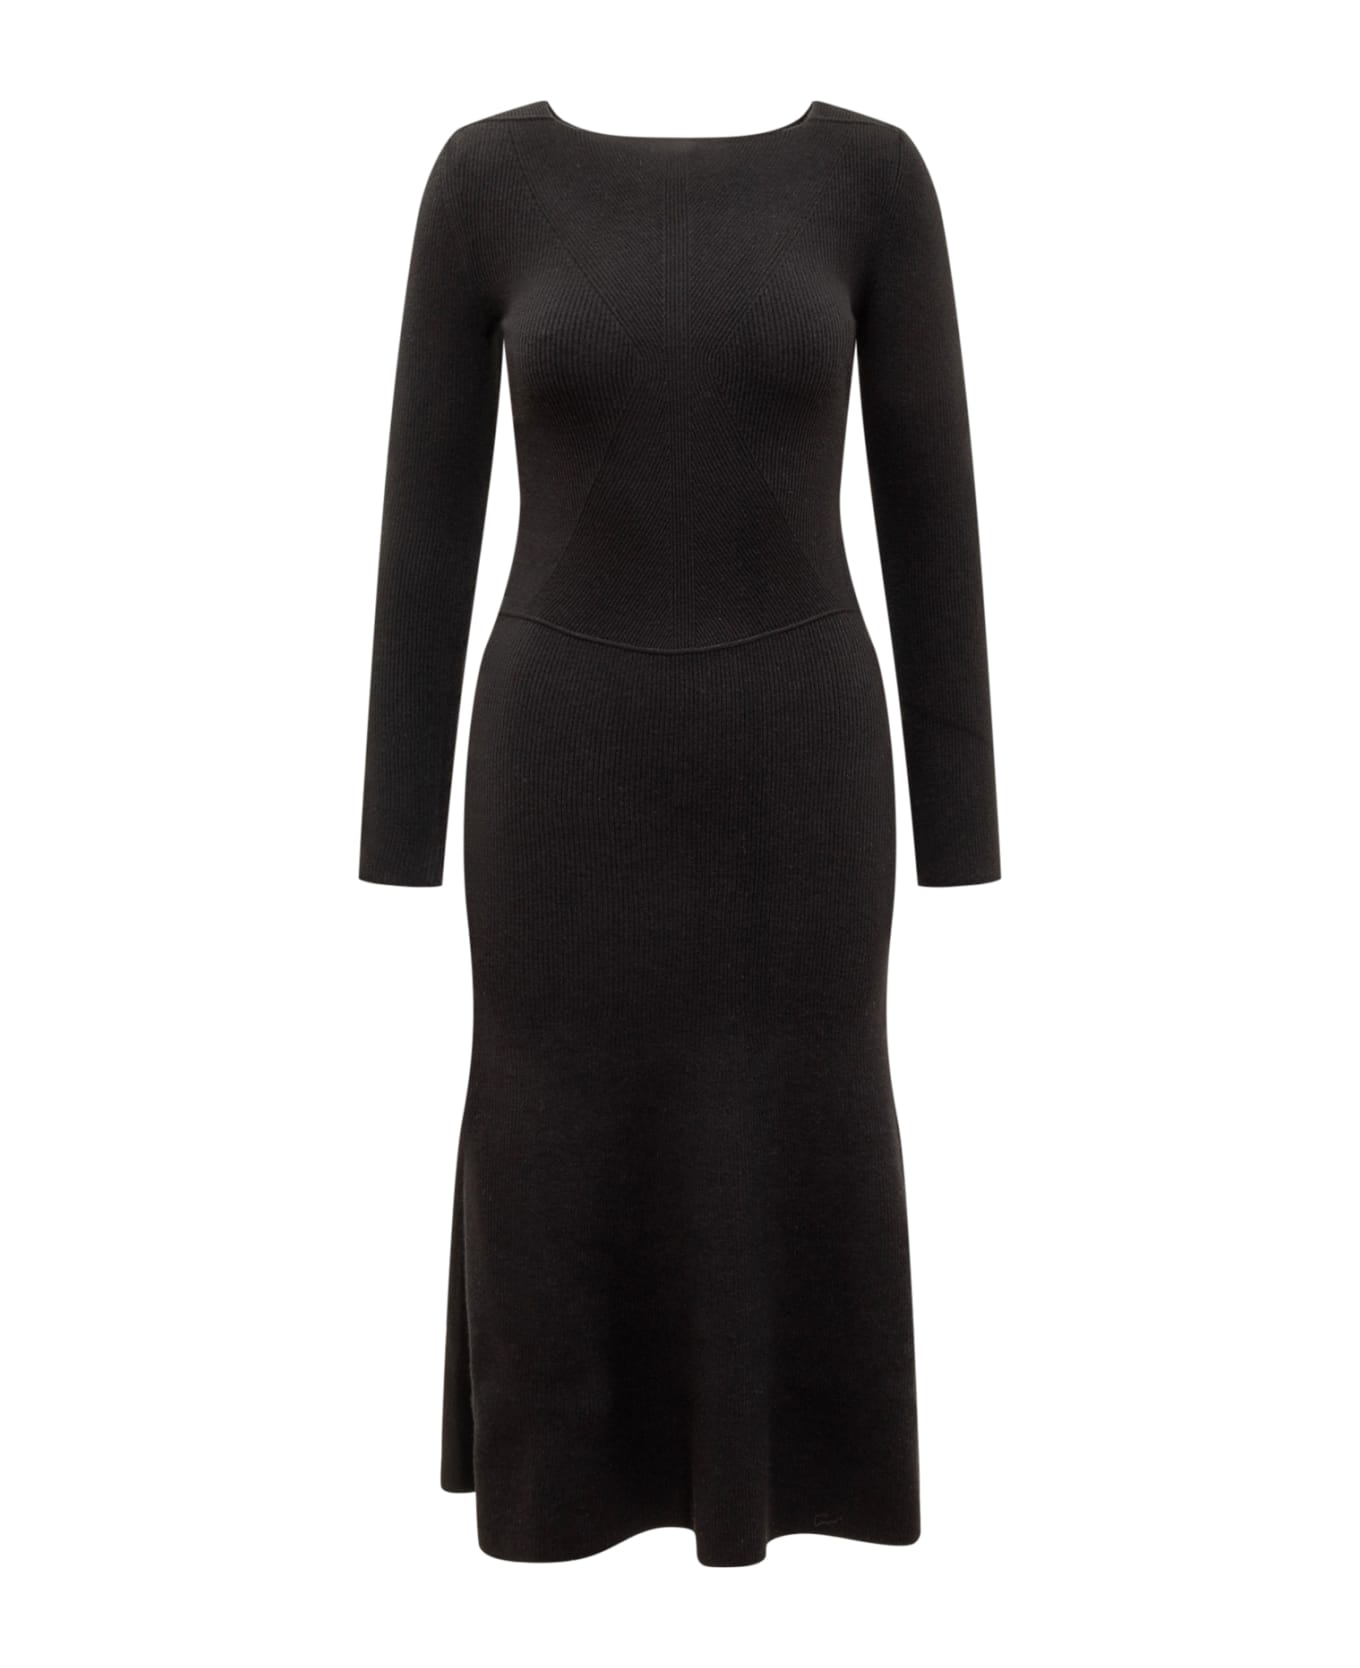 Victoria Beckham Circle Dress - BLACK